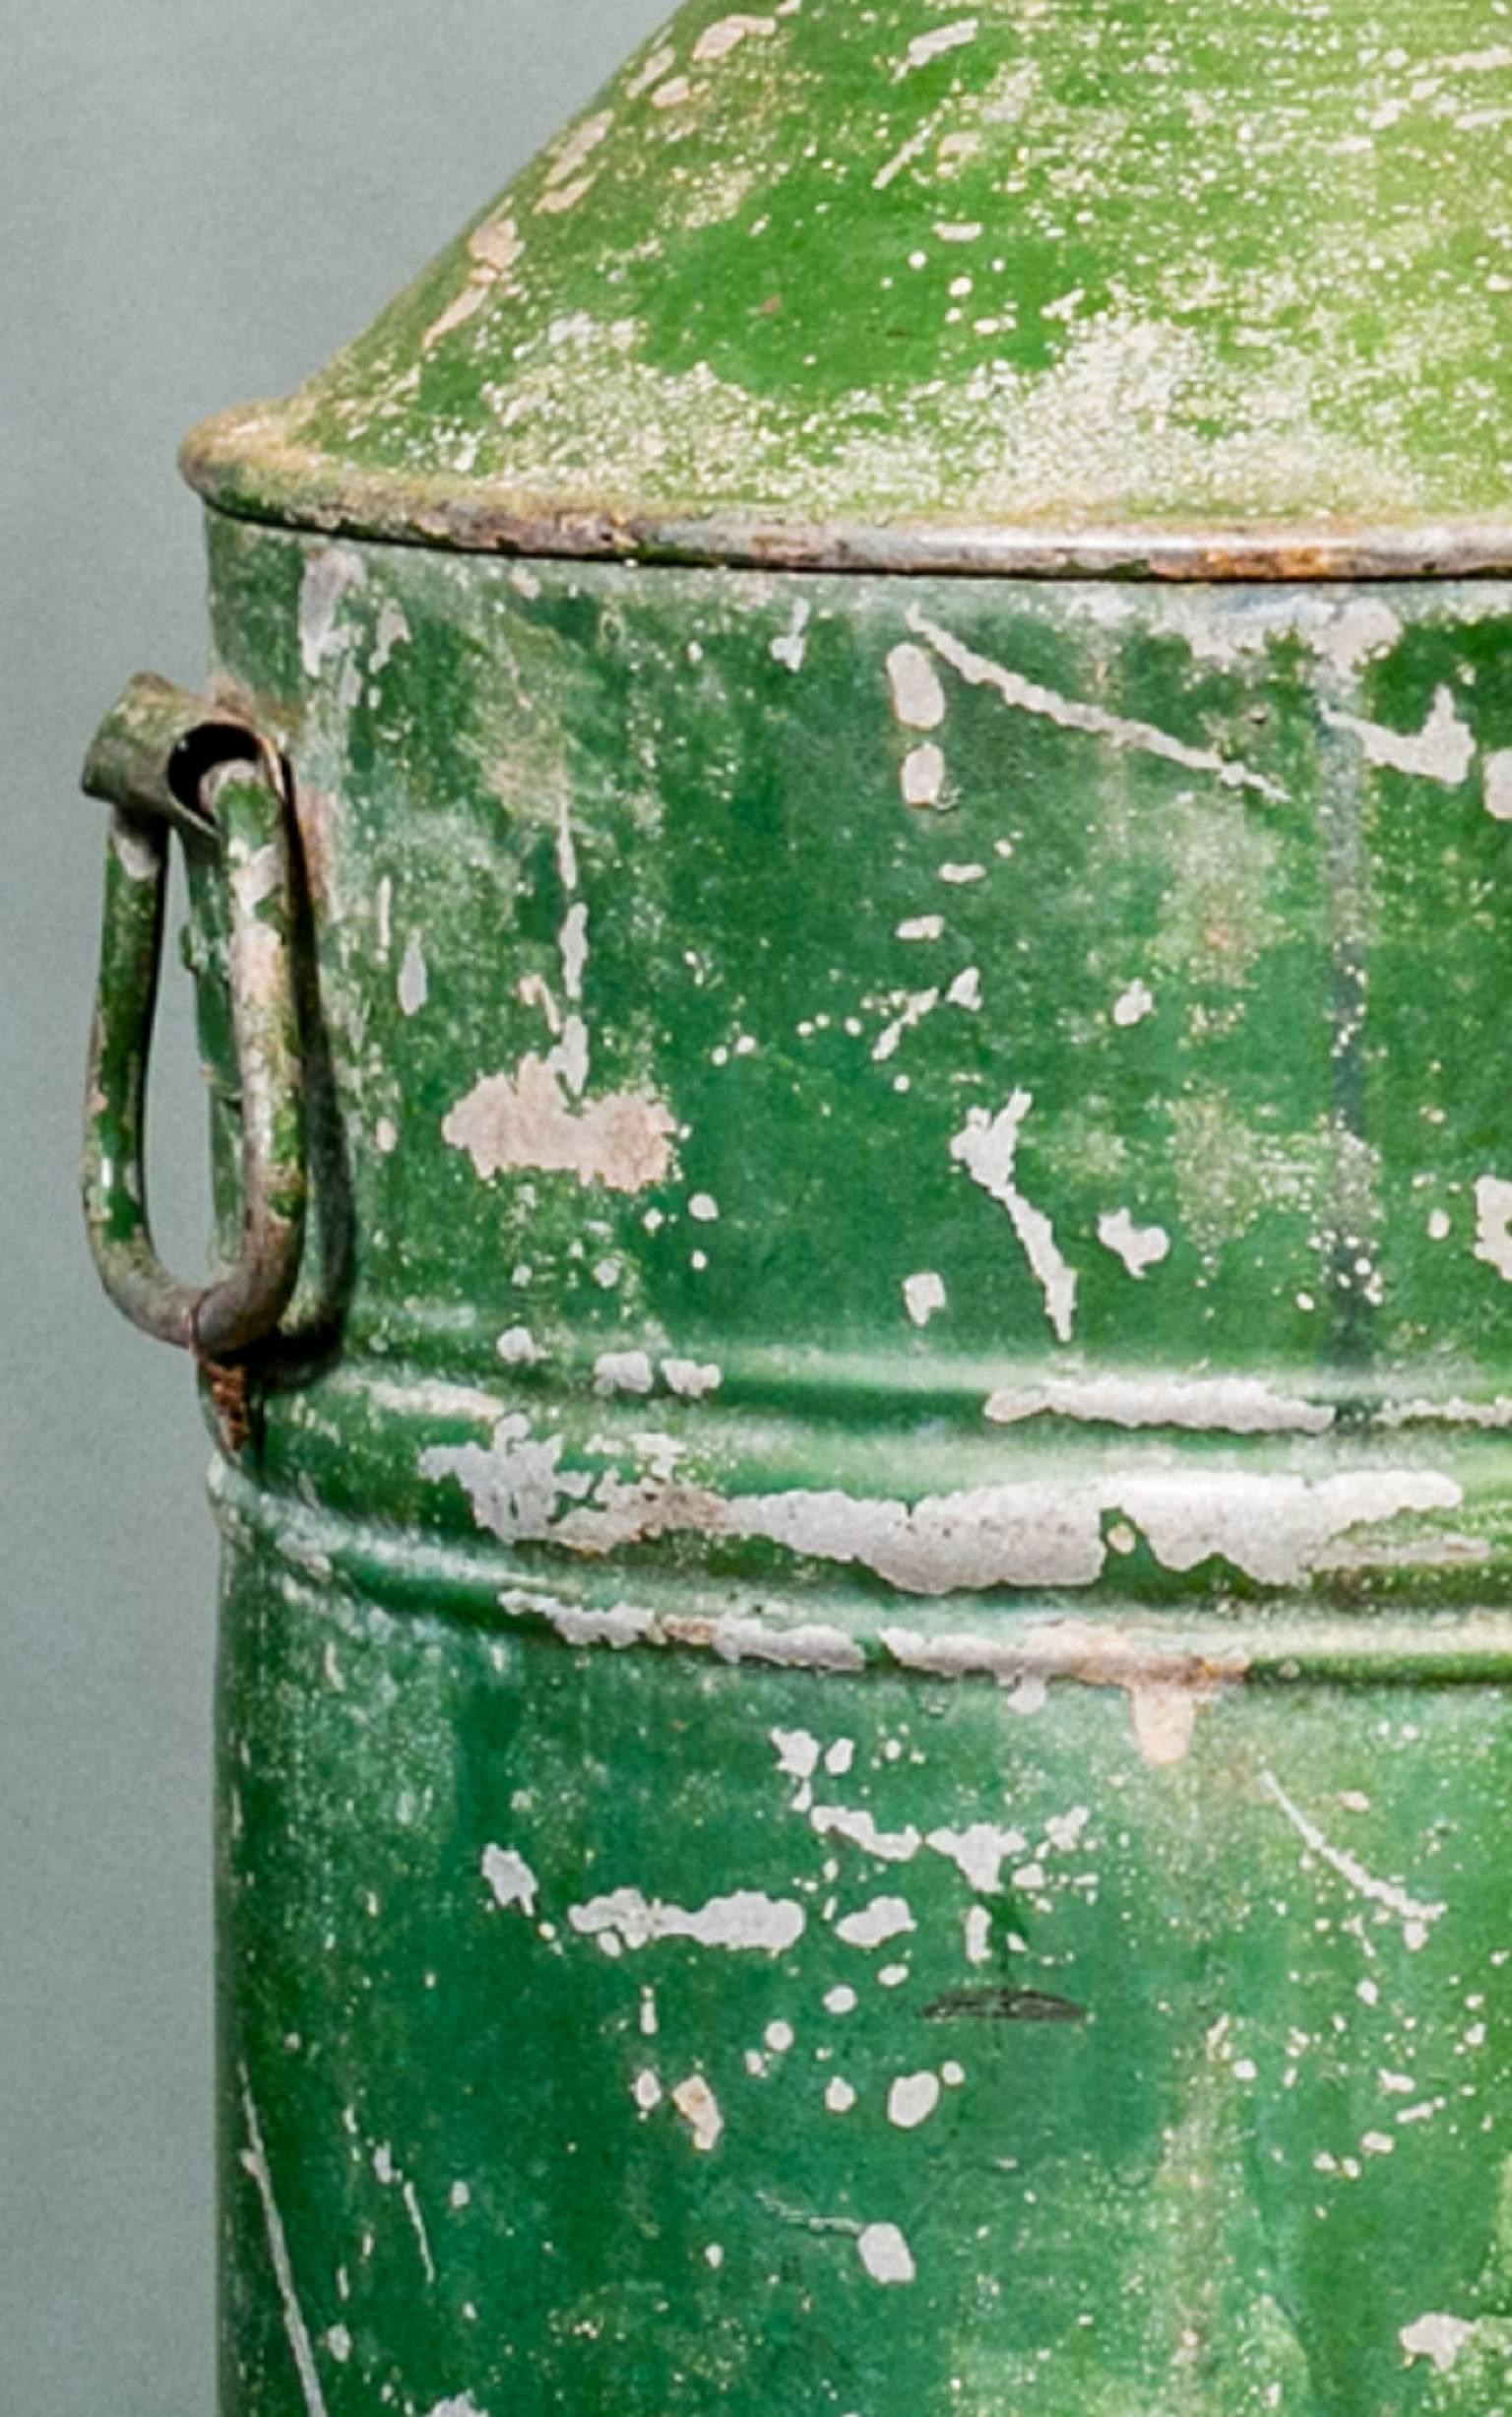 Industrial Rustic Painted Galvanized Vessel as Lamp